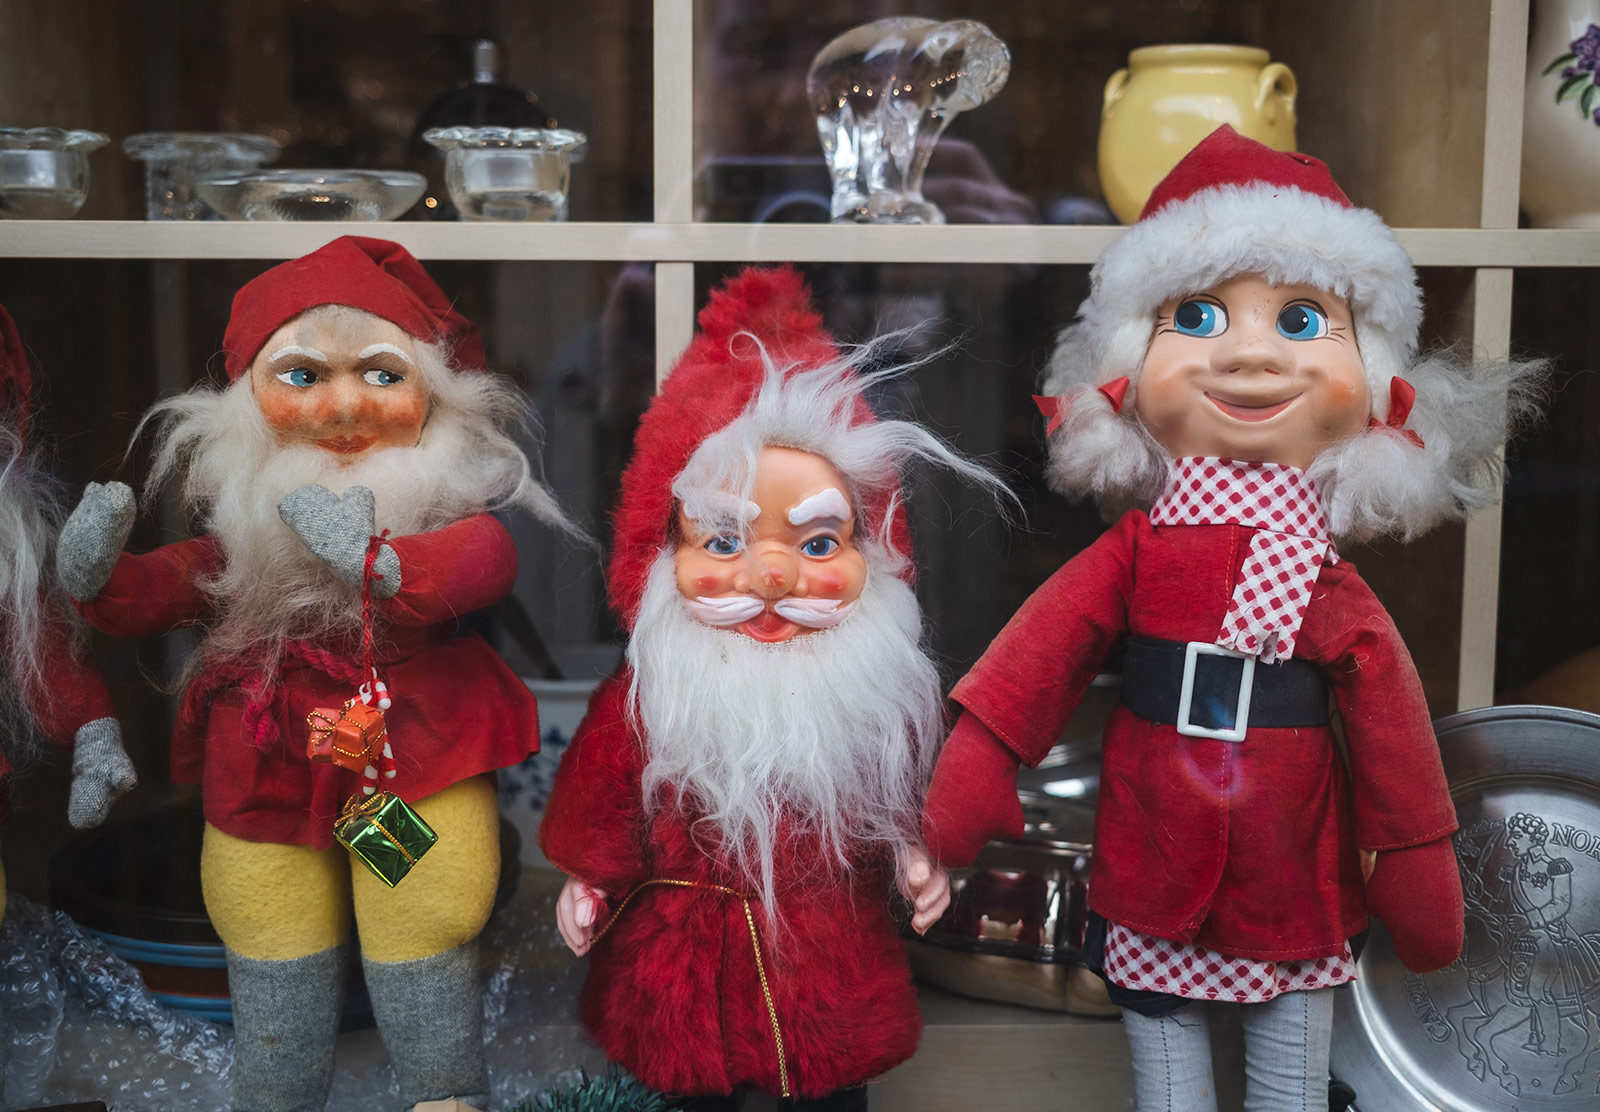 Scary Christmas dolls